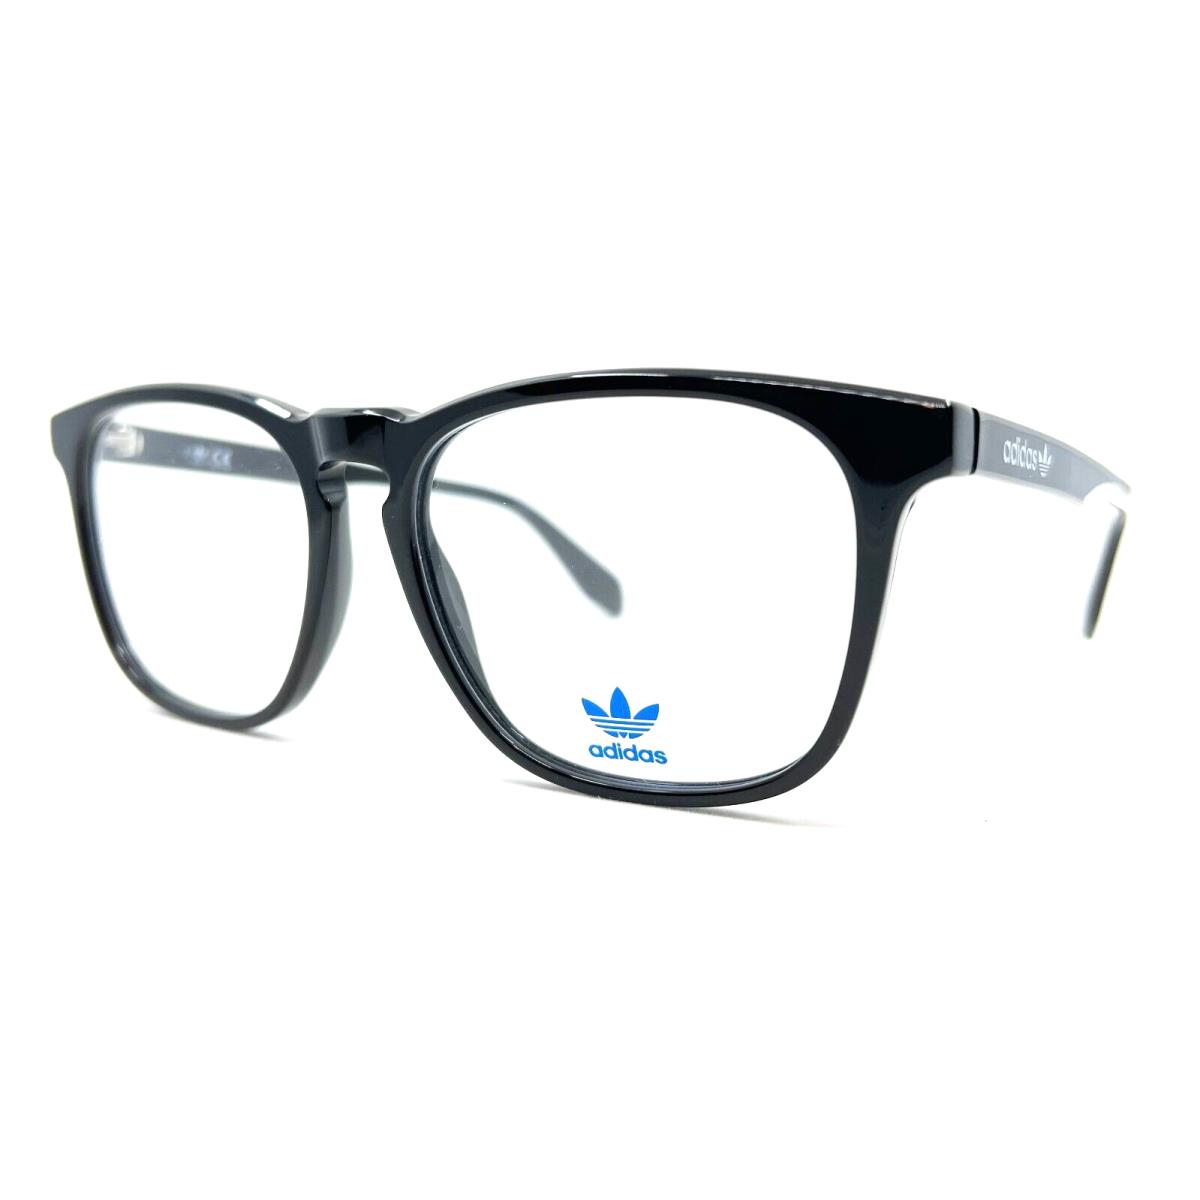 Adidas Originals - OR5020 001 56/16/145 - Black Eyeglasses Case